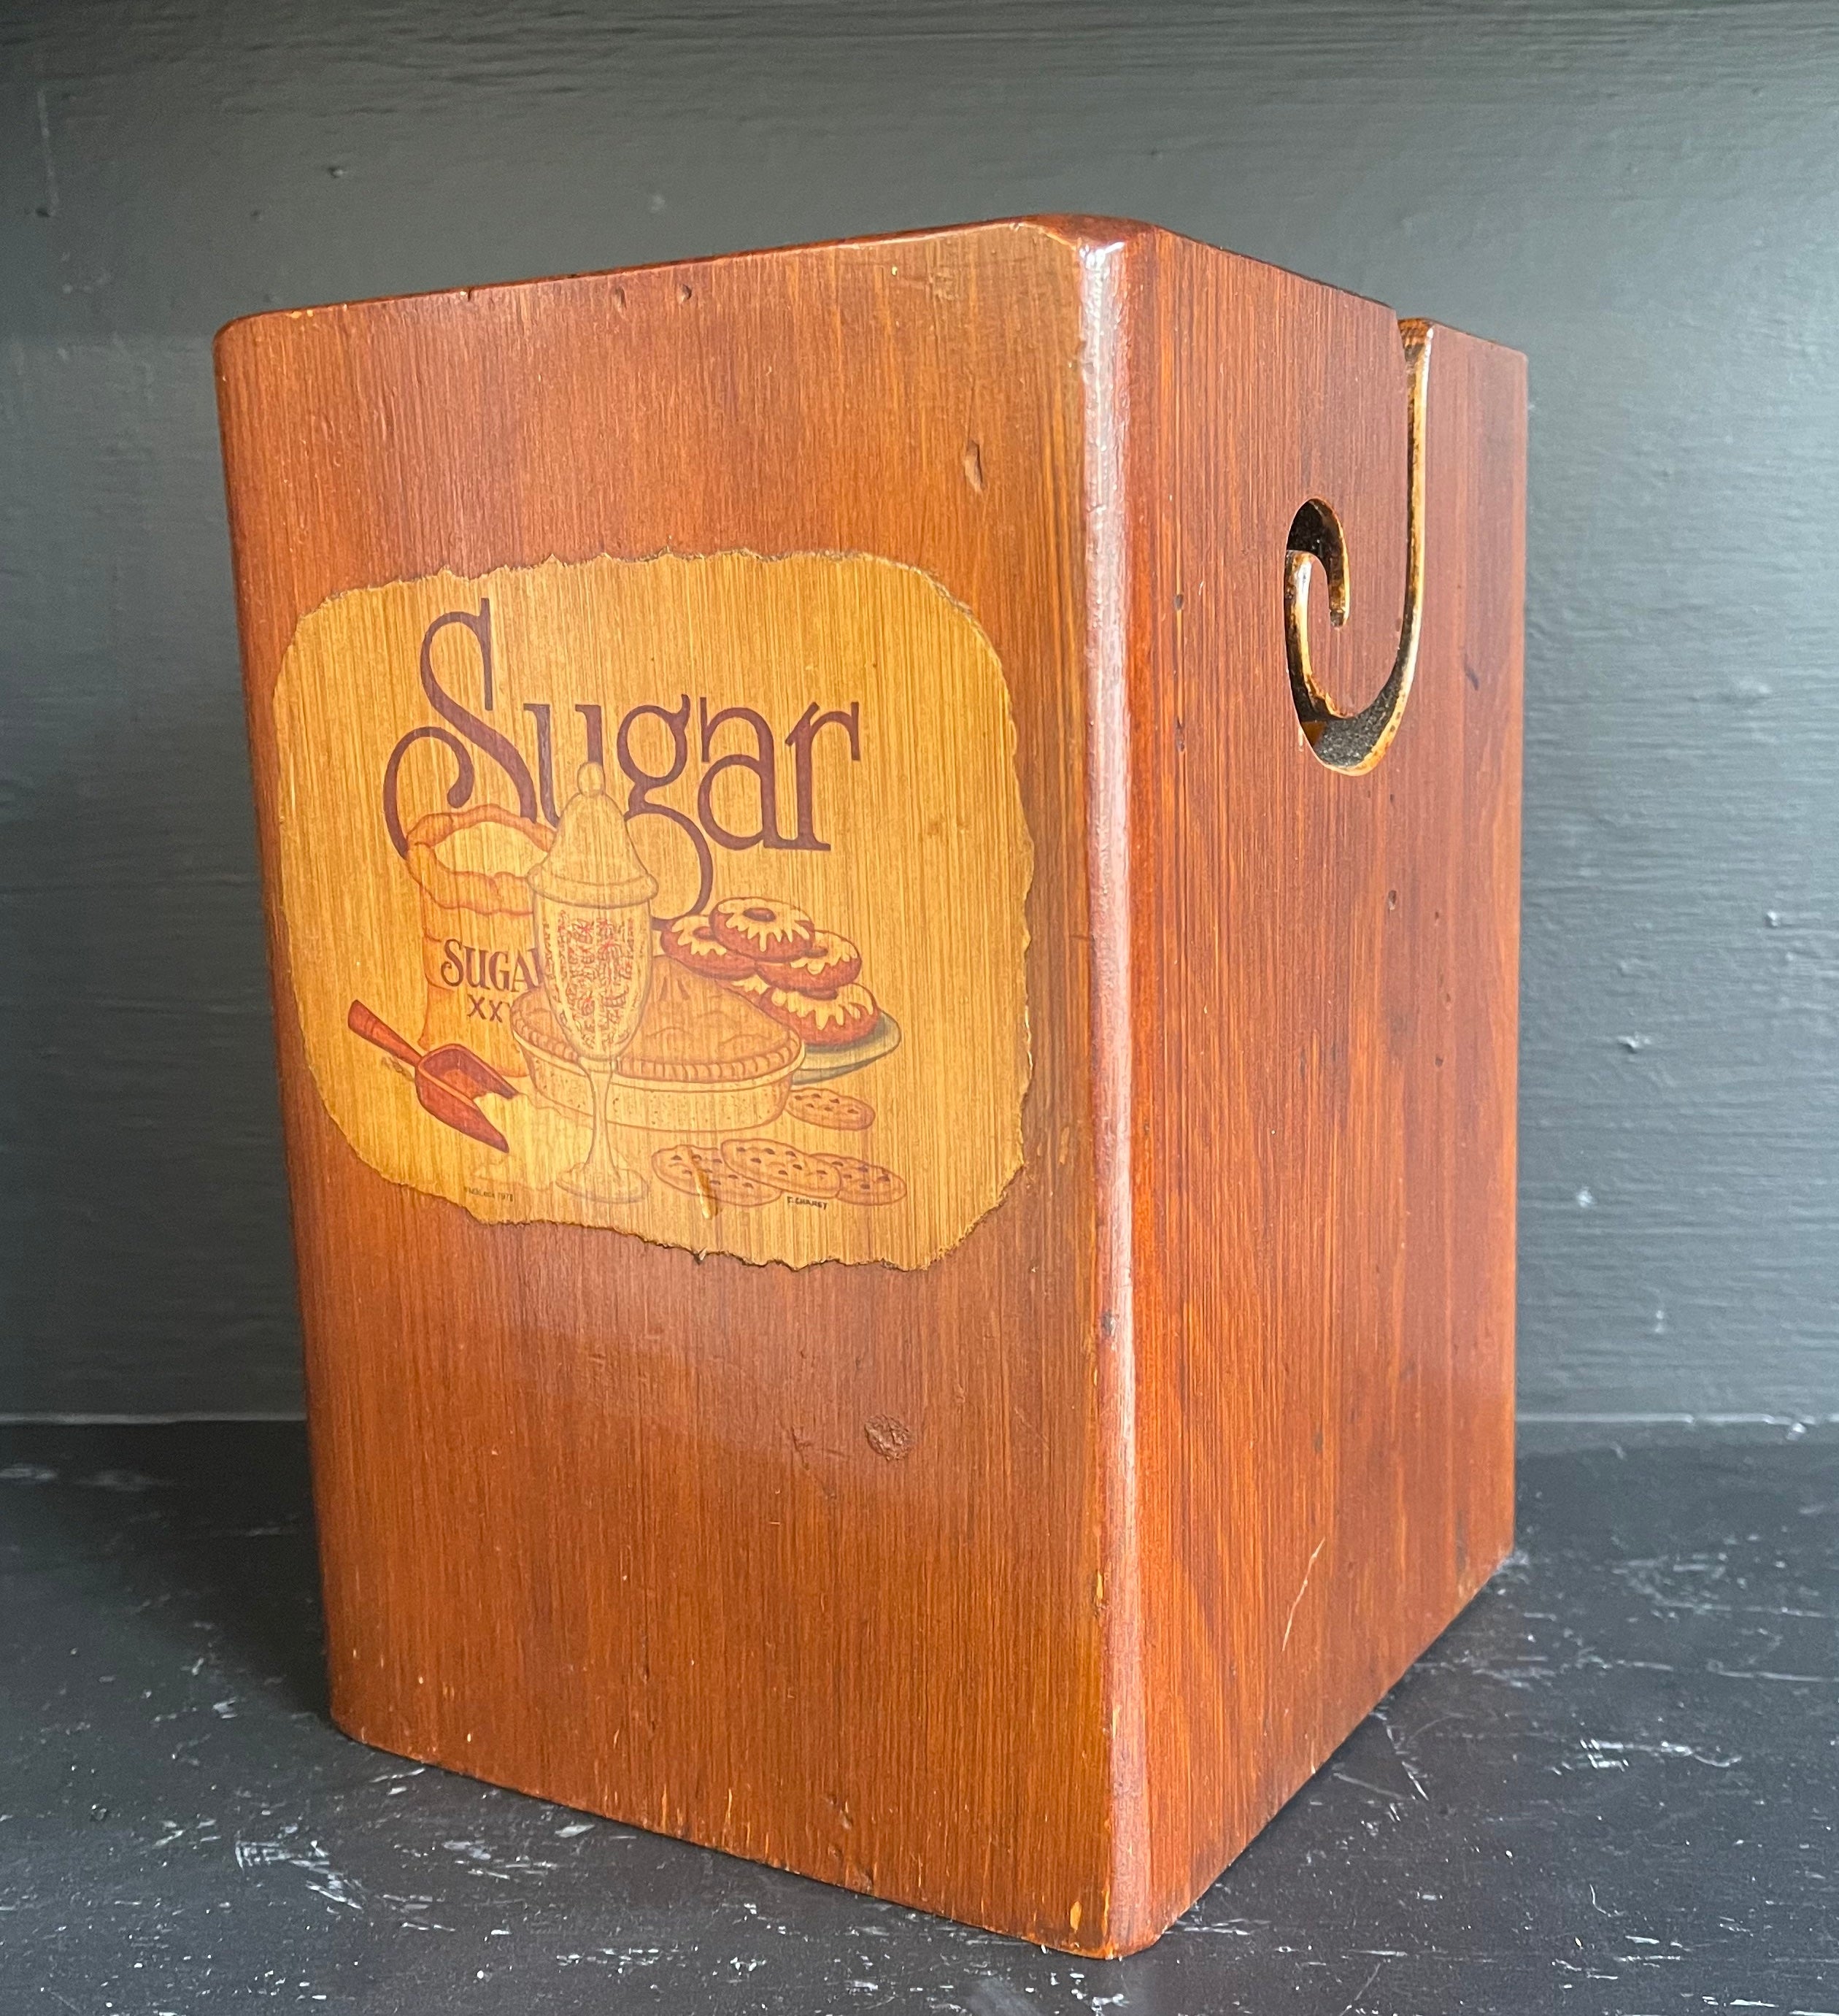 Dean Hood Project/Yarn Container (Sugar Box)